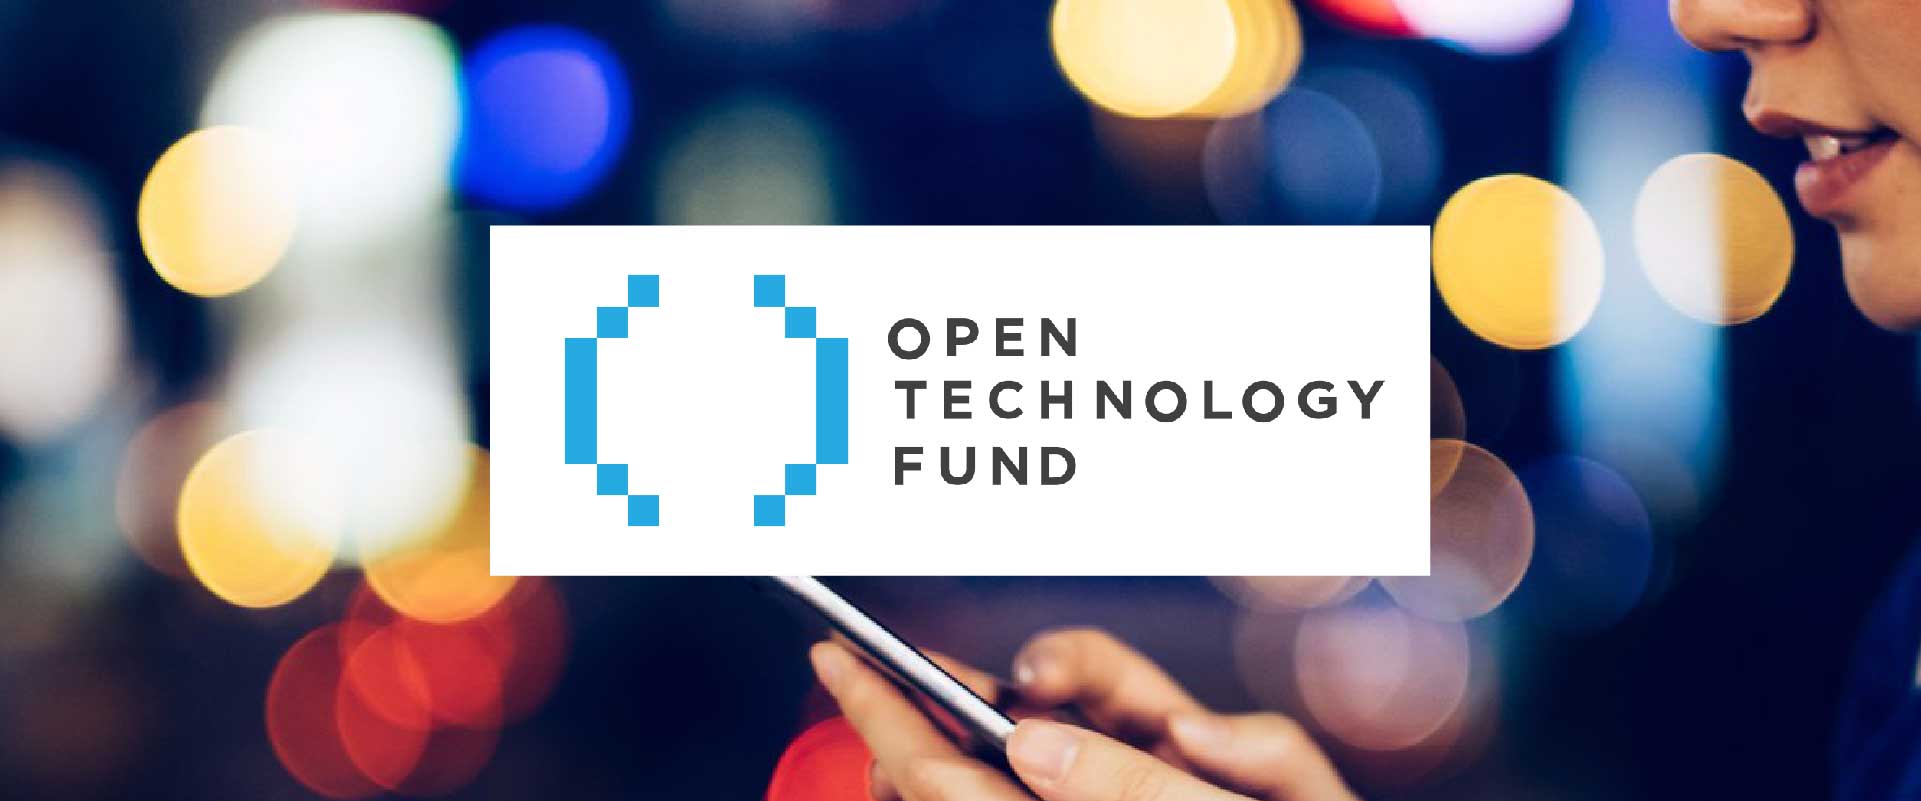 open technology fund Imagen destacada